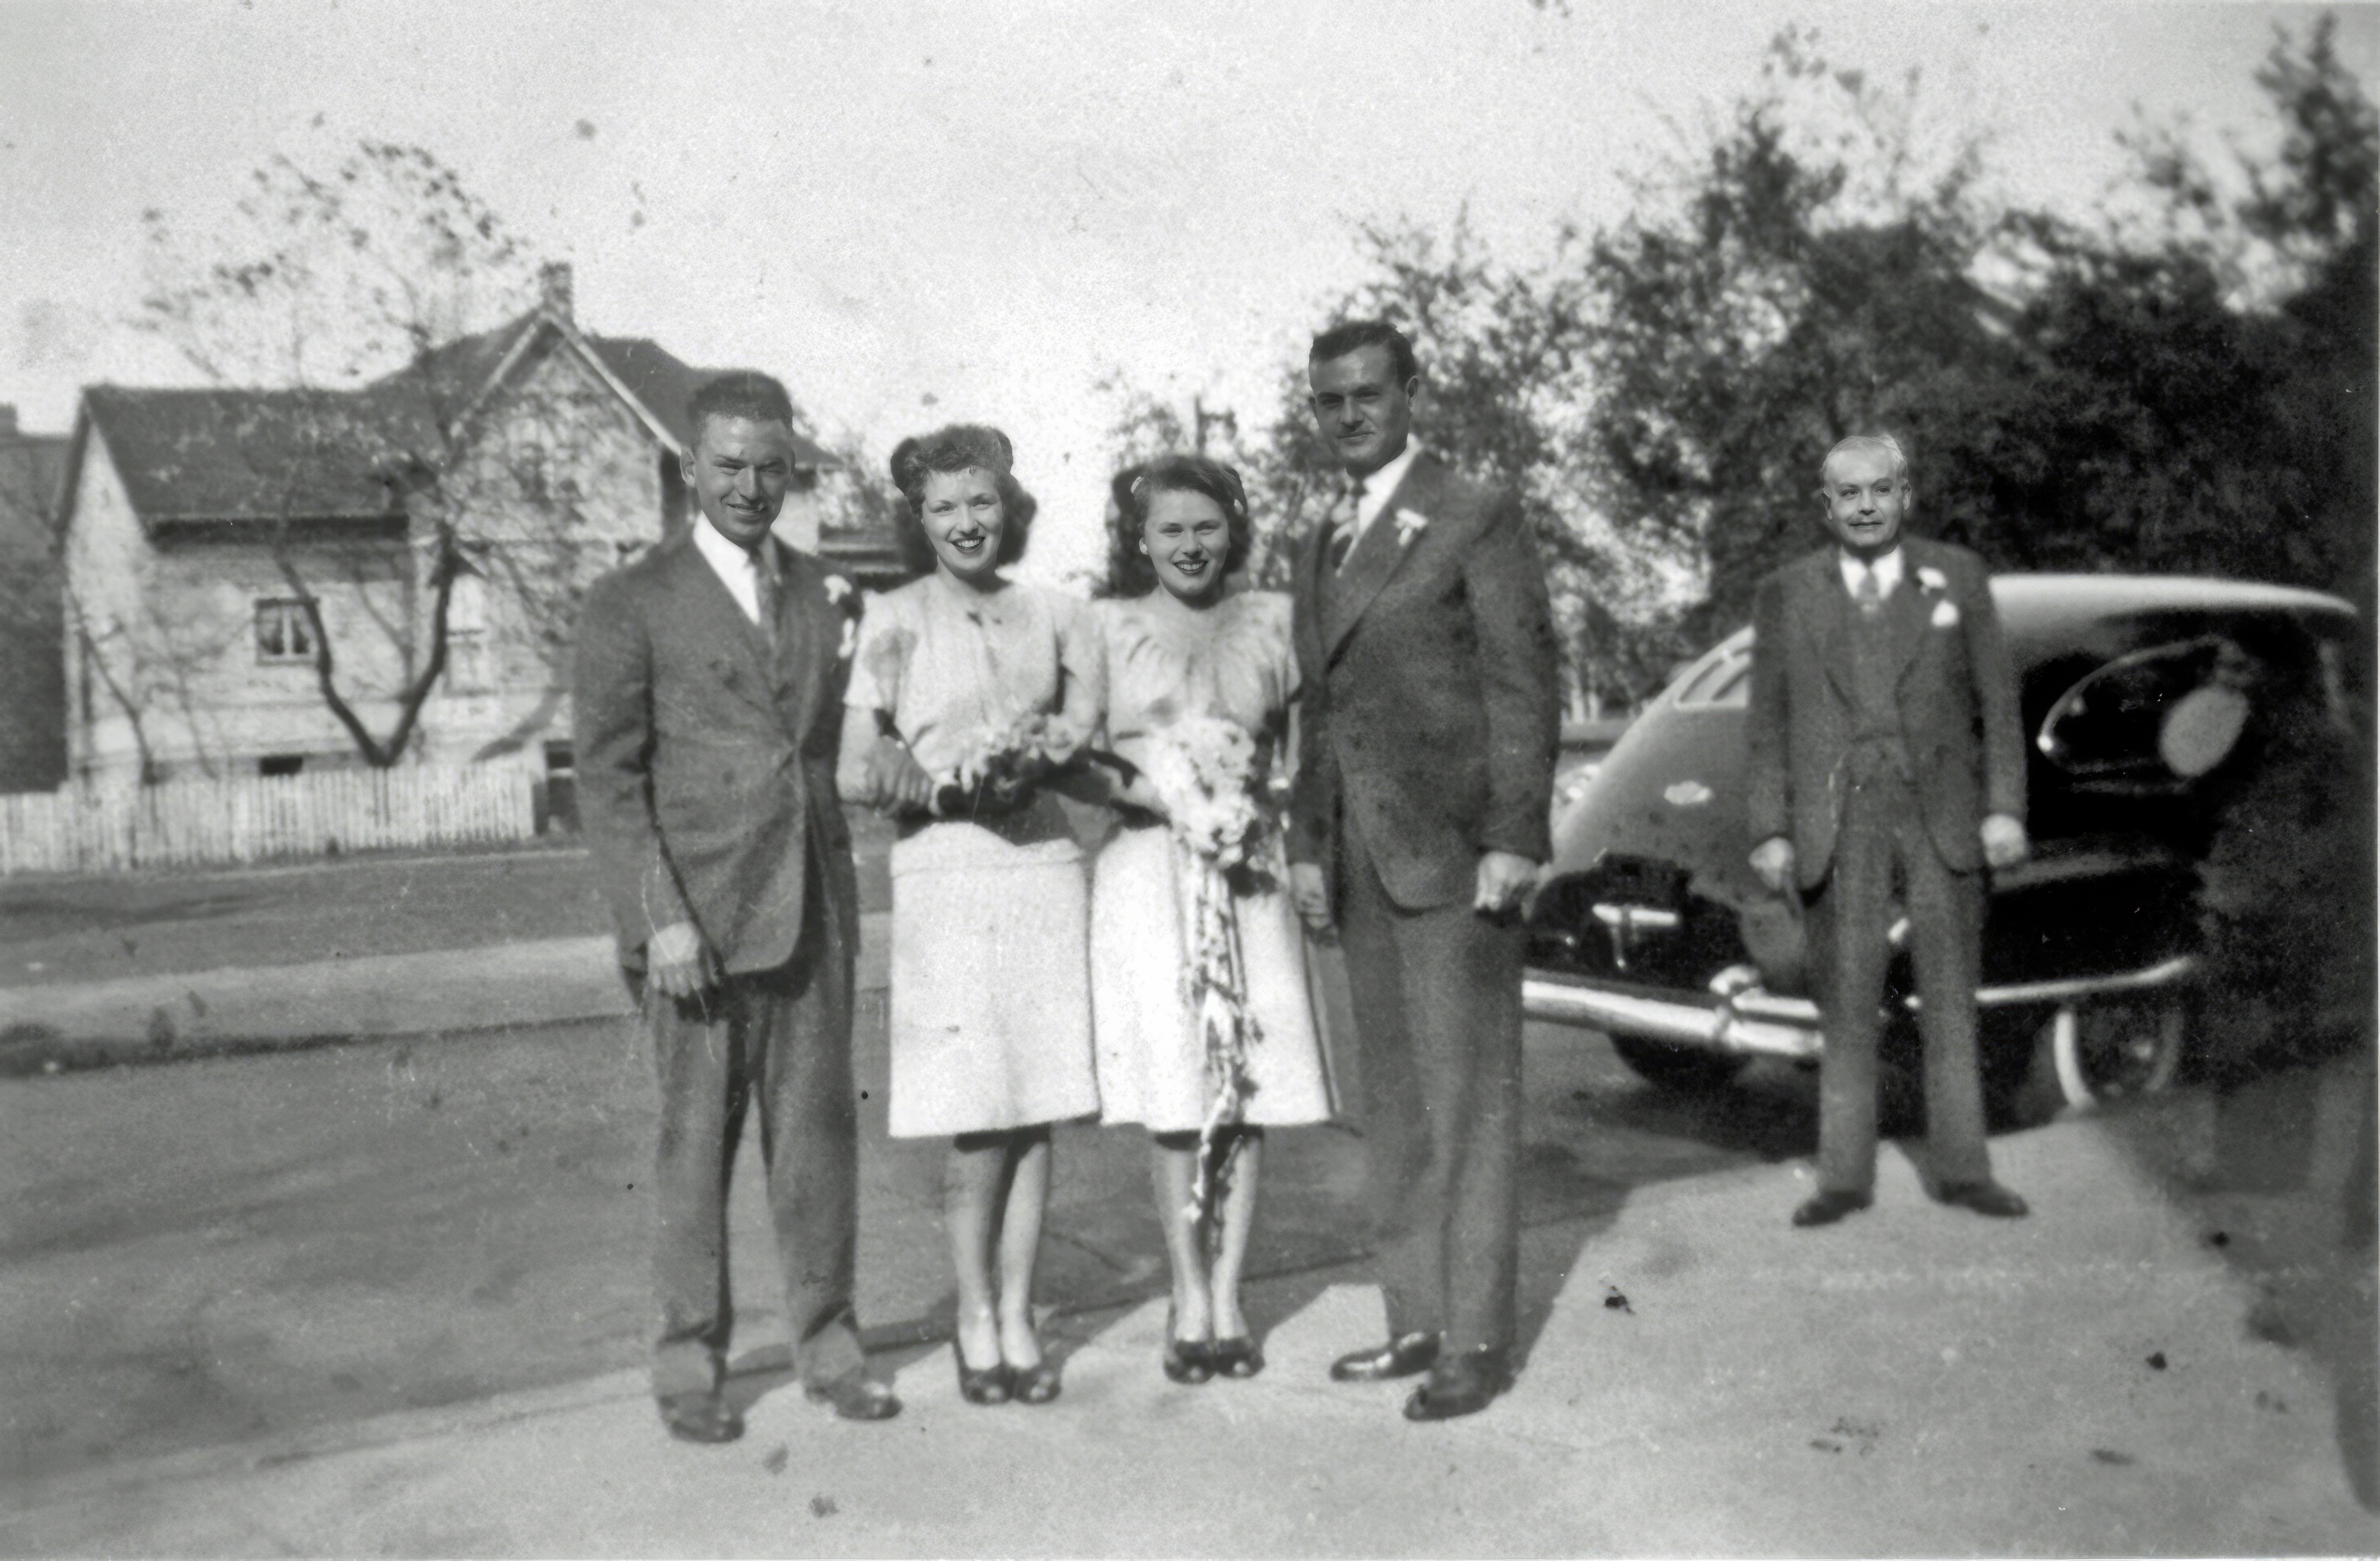 Leo Skiba and Lolus Bruns, wedding day, 1945